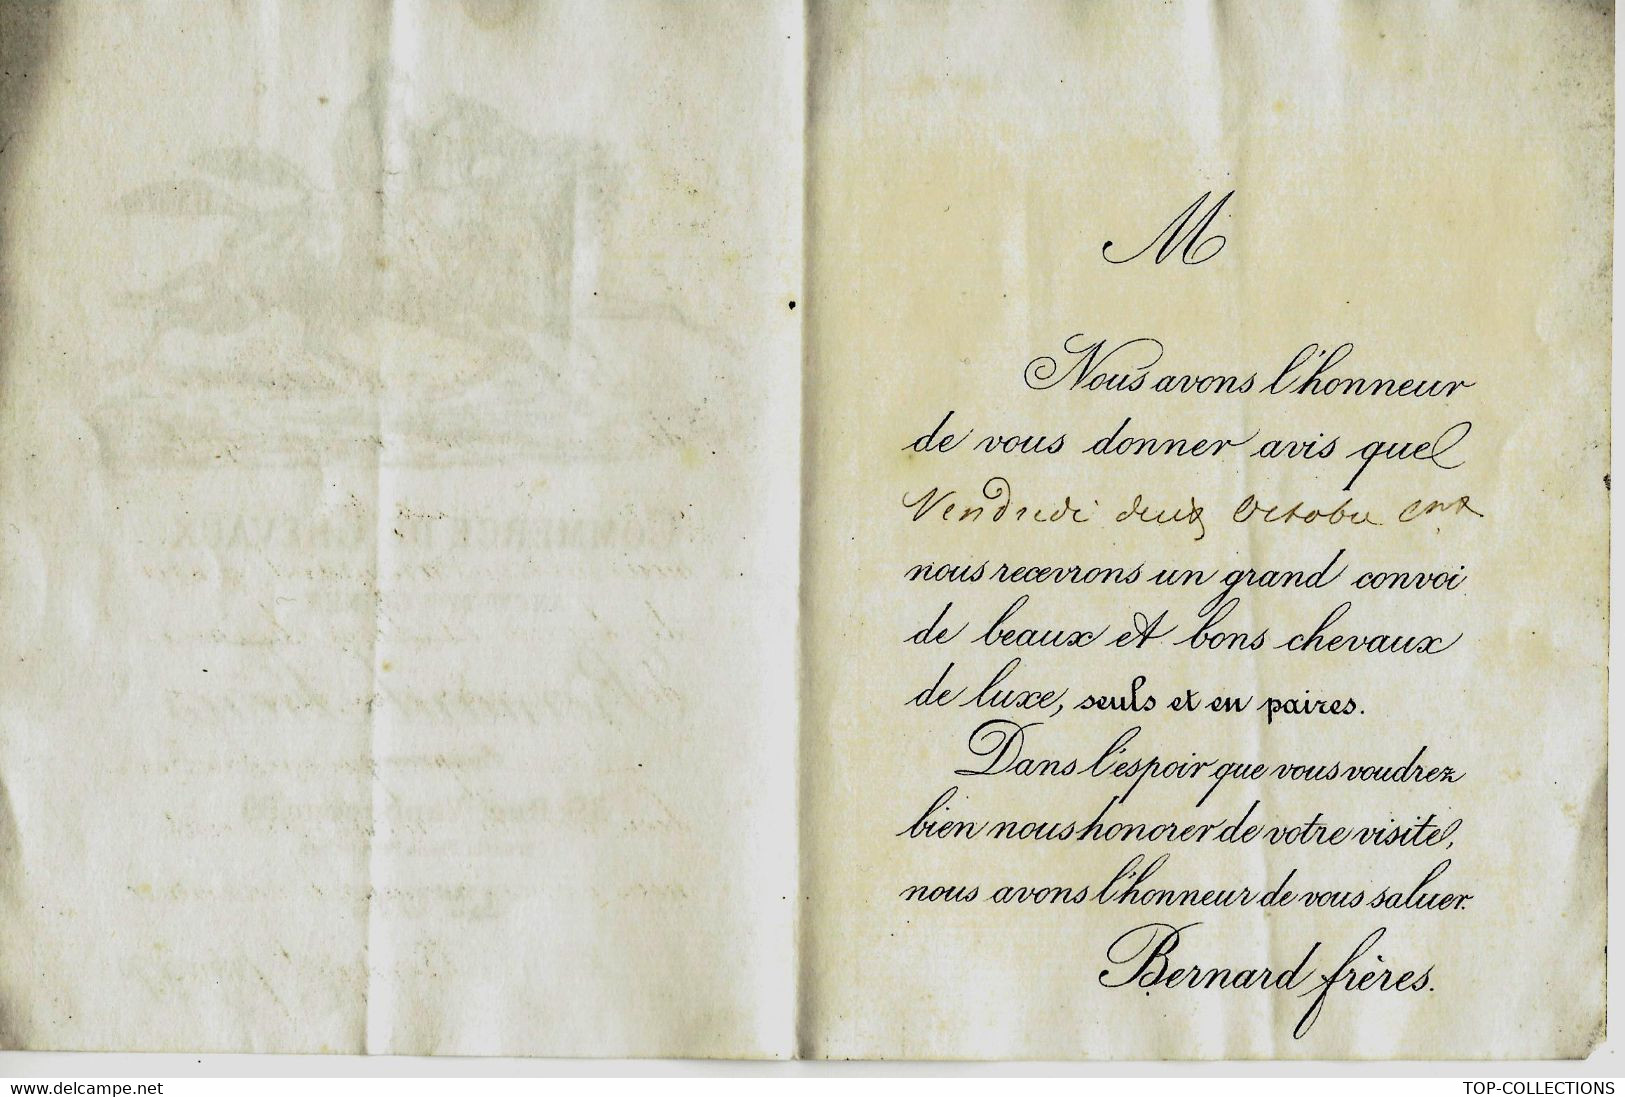 Circa 1880 1890 INVITATION AVEC SUPERBE GRAVURE  COMMERCE DE CHEVAUX ENTETE BERNARD FRERES LYON - Sammlungen